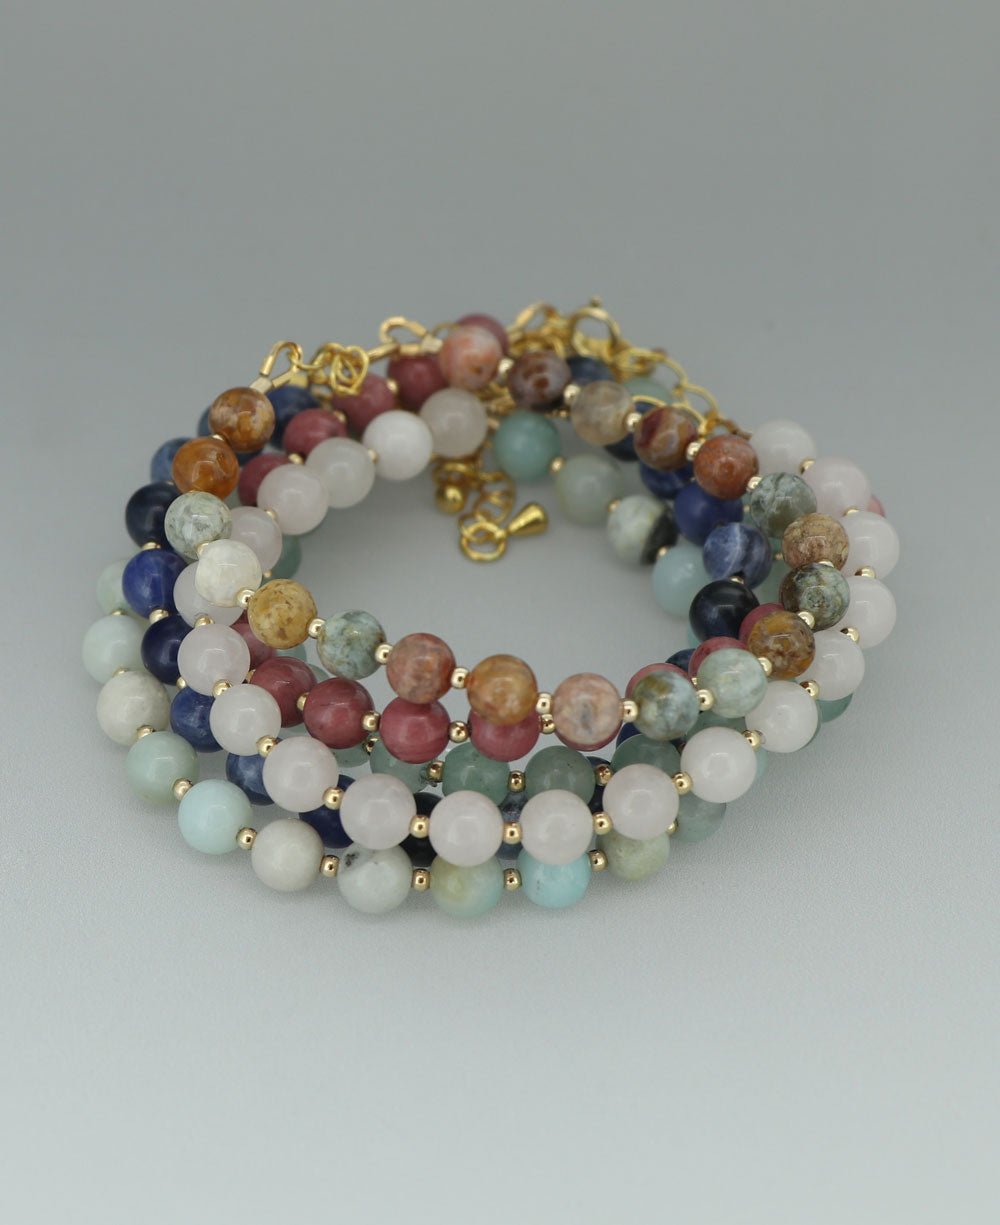 Gemstone Wrist Mala Bracelet, 20 Beads - Bracelets Amazonite